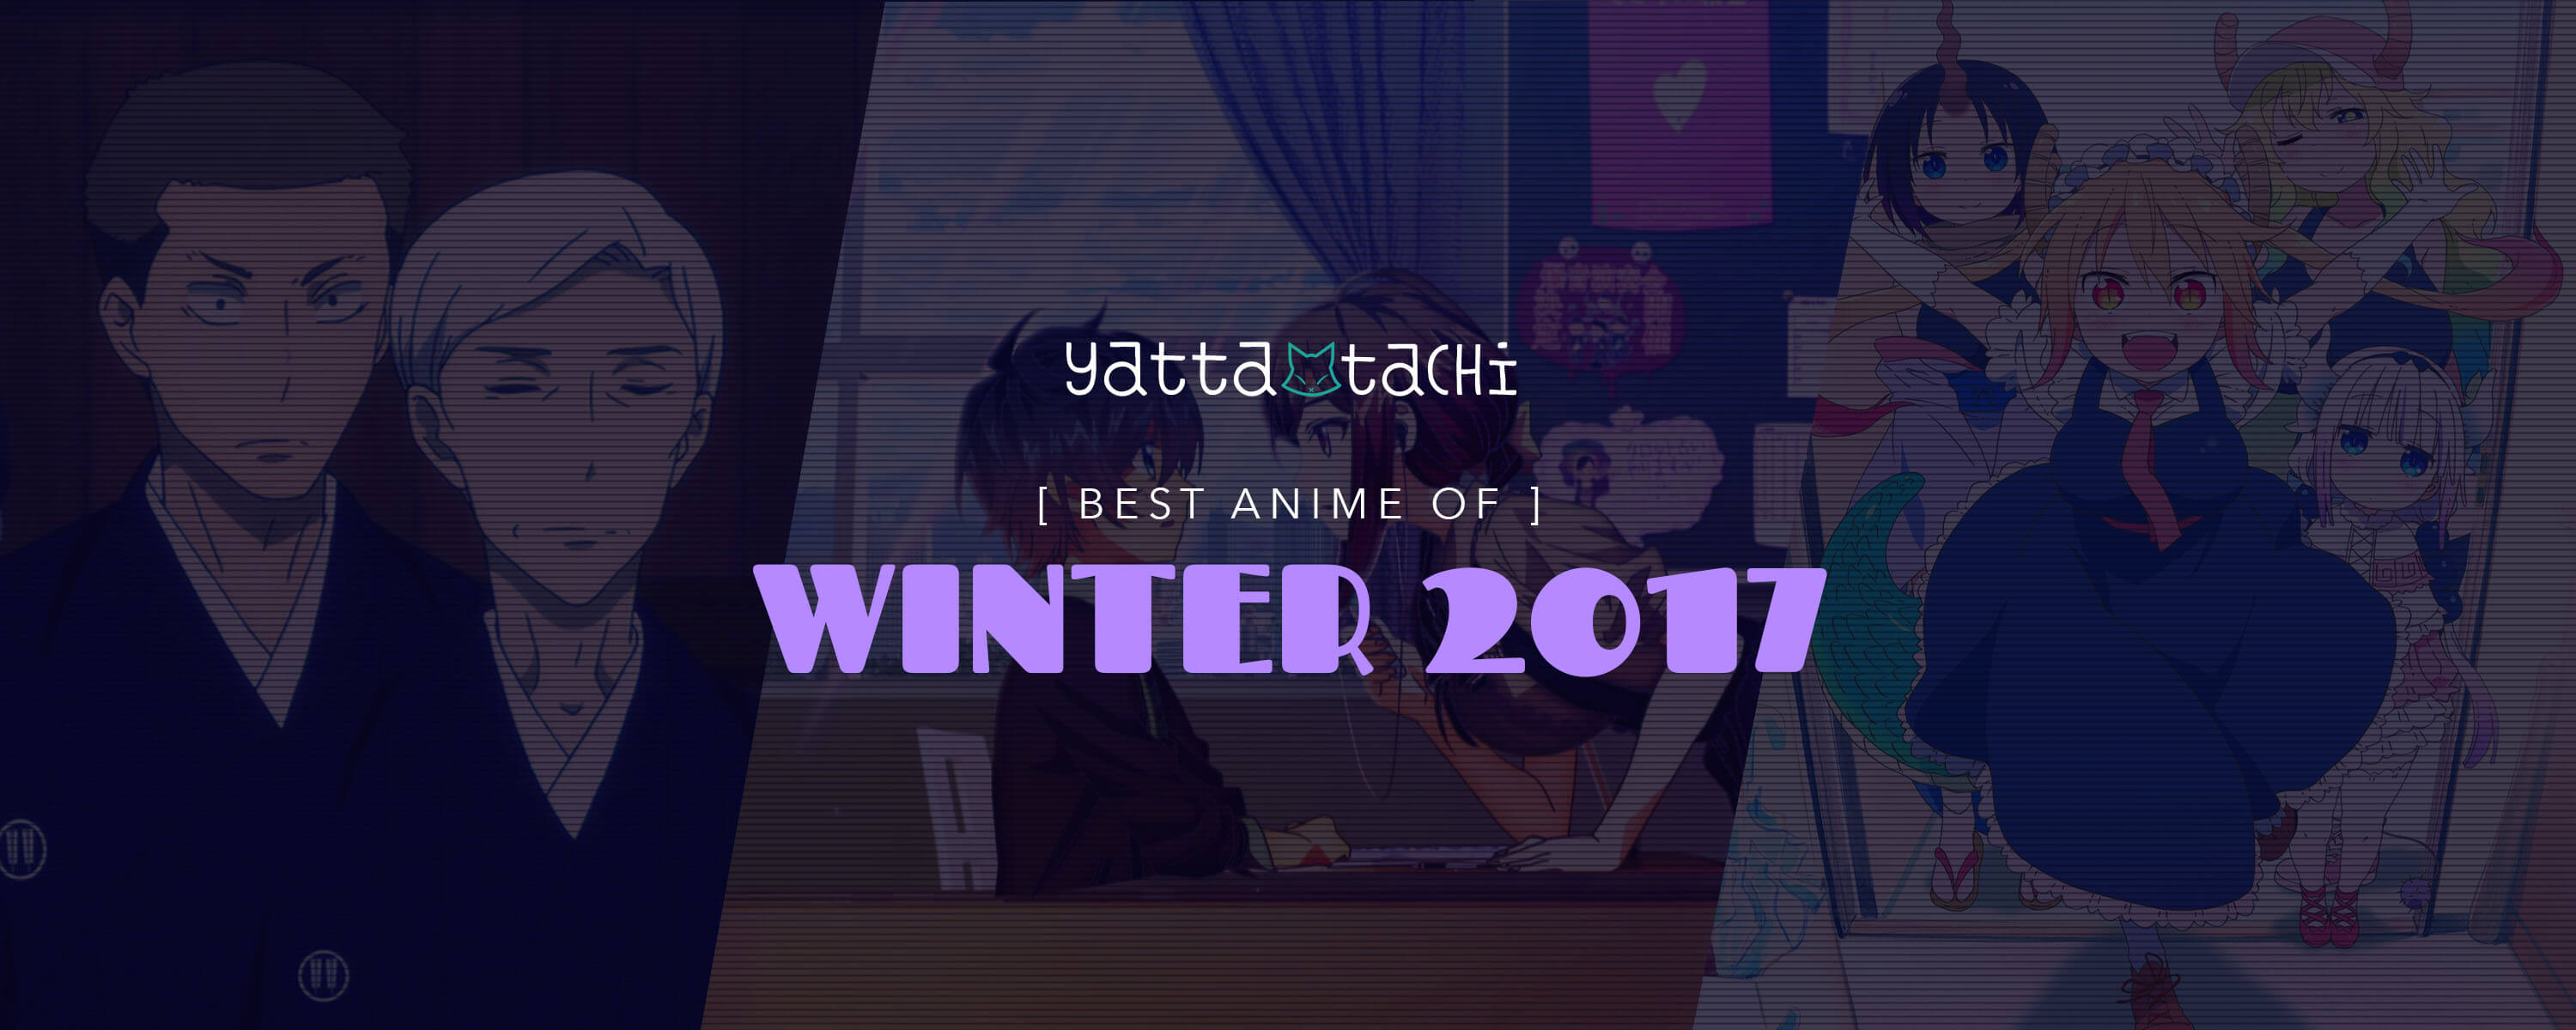 The Best Anime of Winter 2017 | Yatta-Tachi